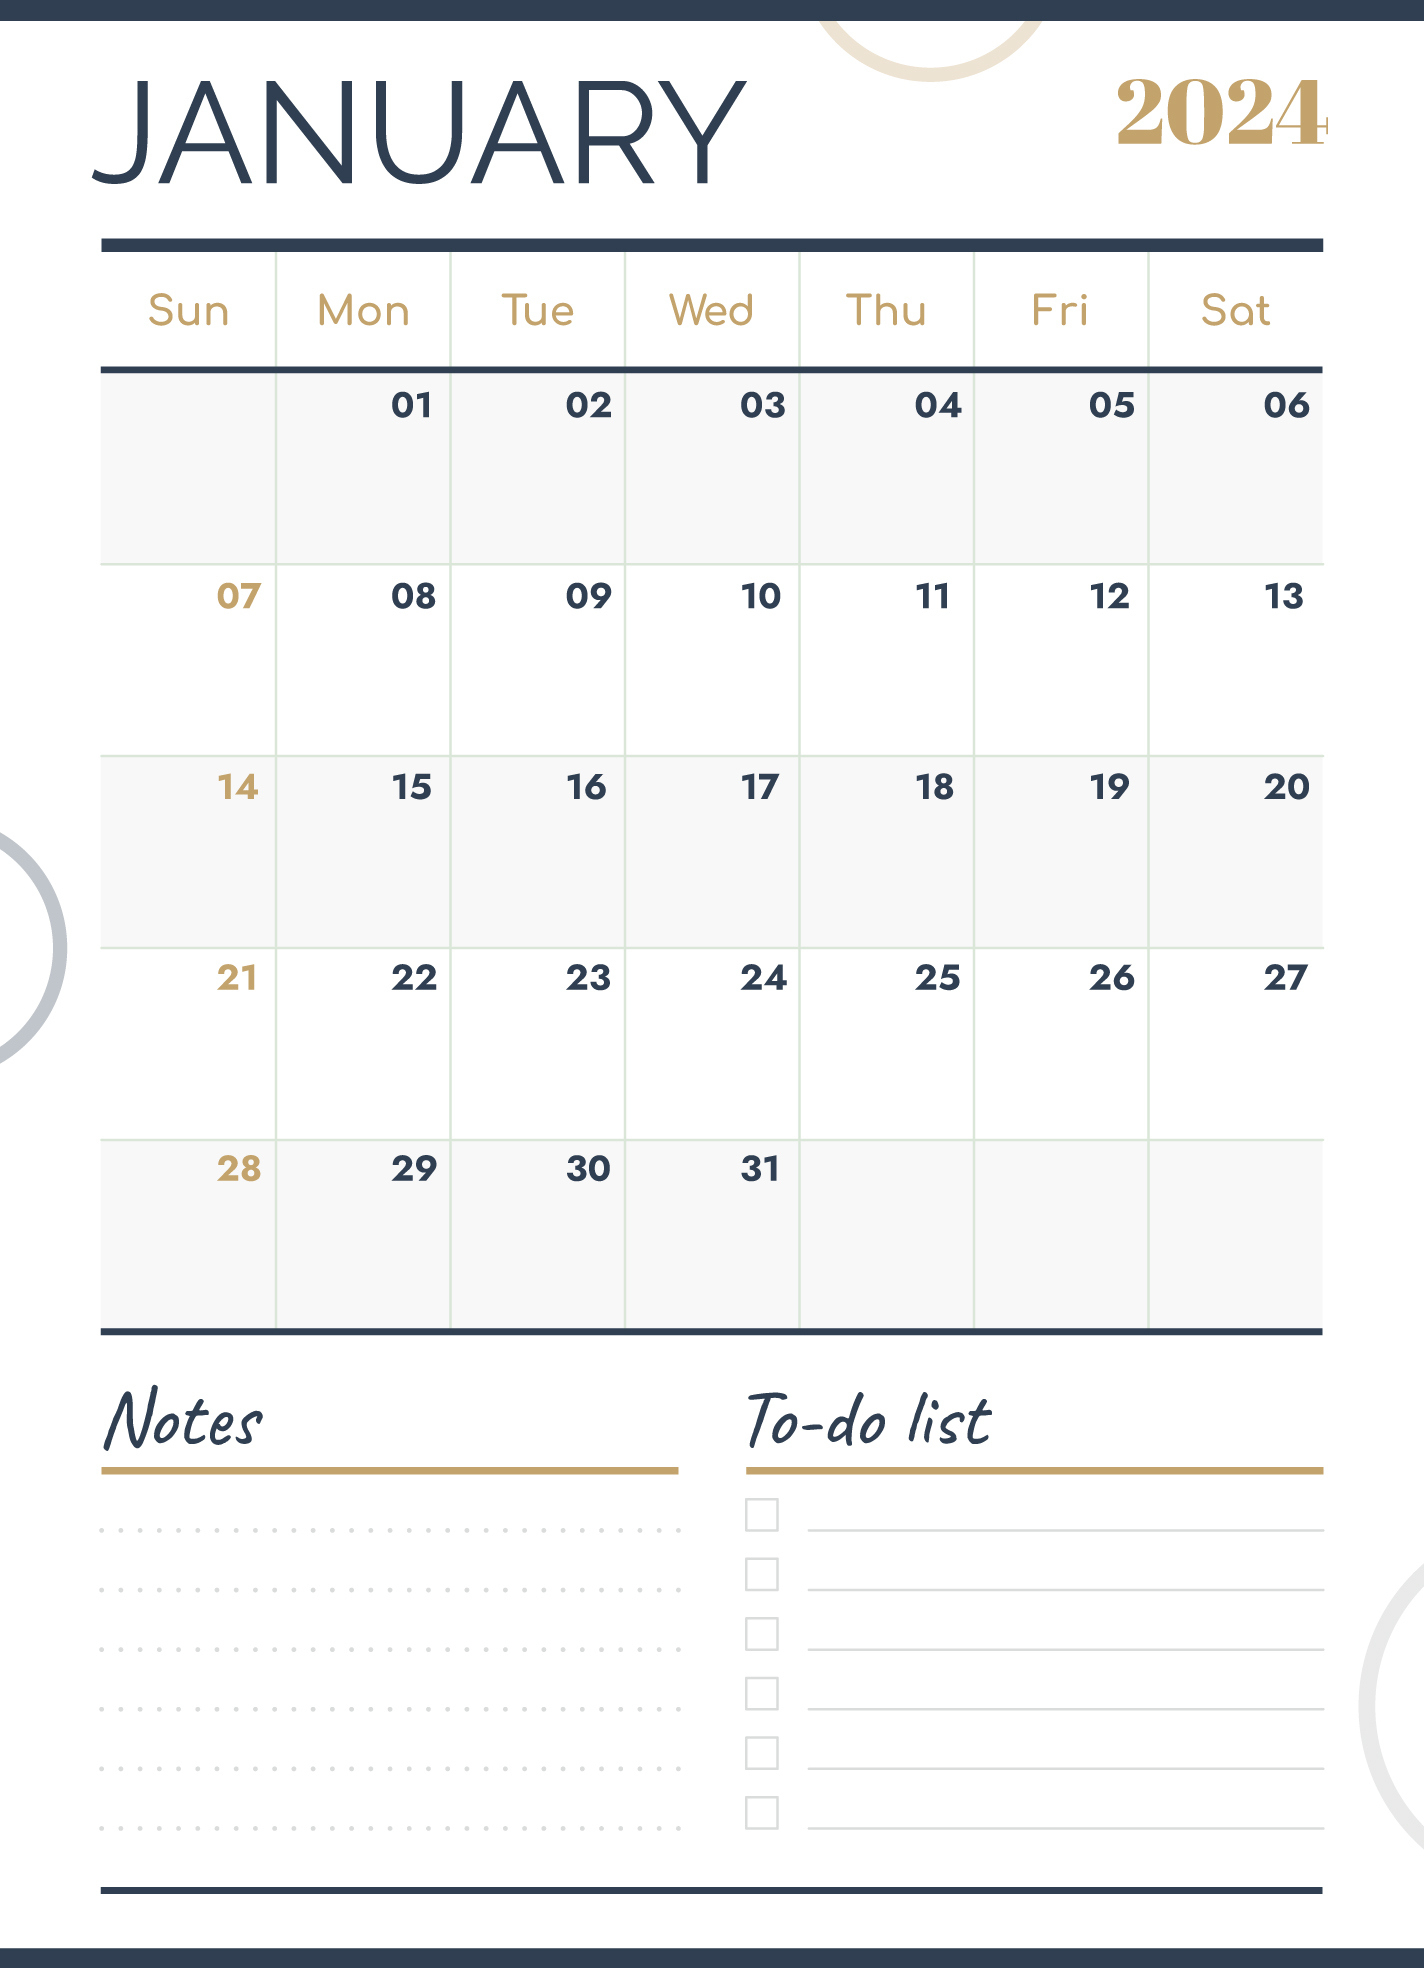 January 2024 Calendar Free Google Docs Template - Gdoc.io | Google Printable Calendar 2024